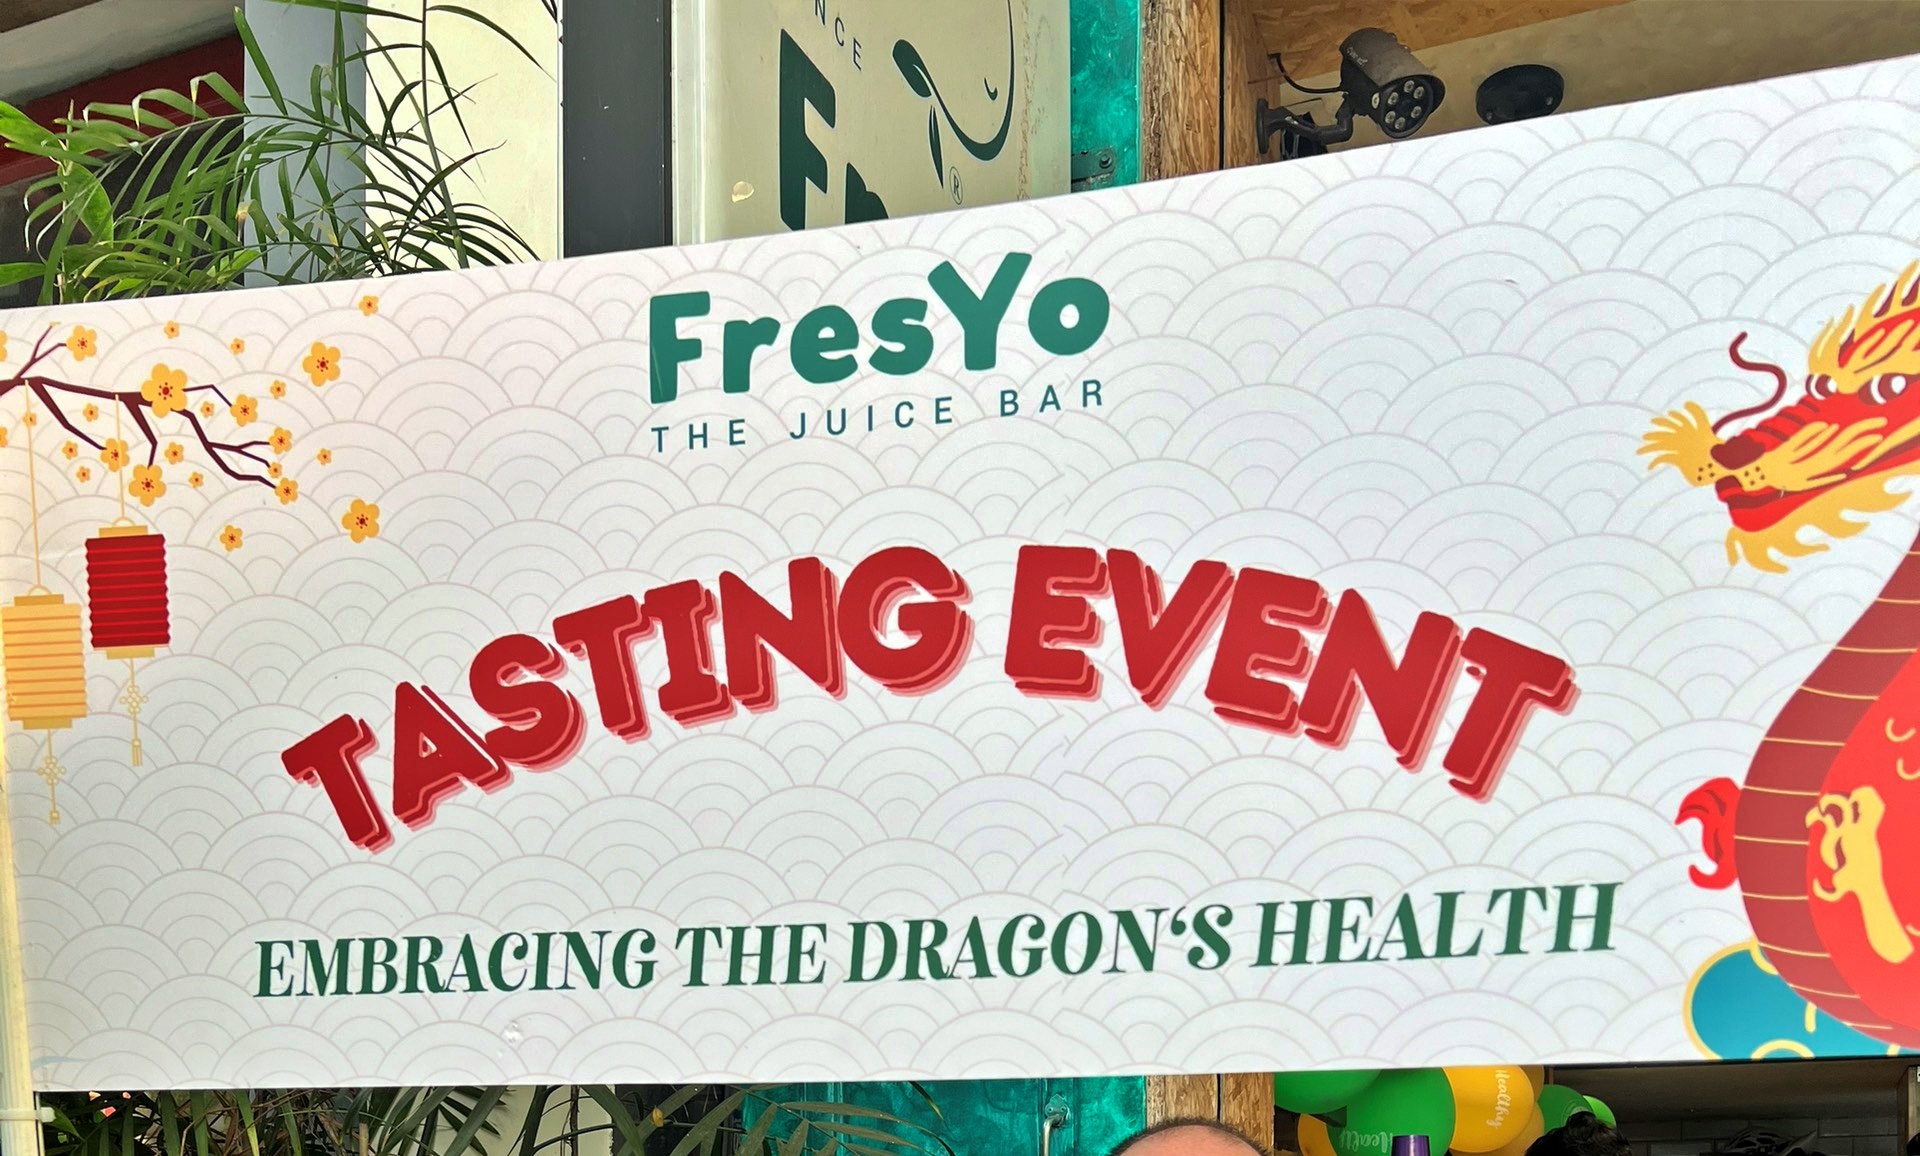 “EMBRACING THE DRAGON‘S HEALTH” - FRESYO TASTING EVENT